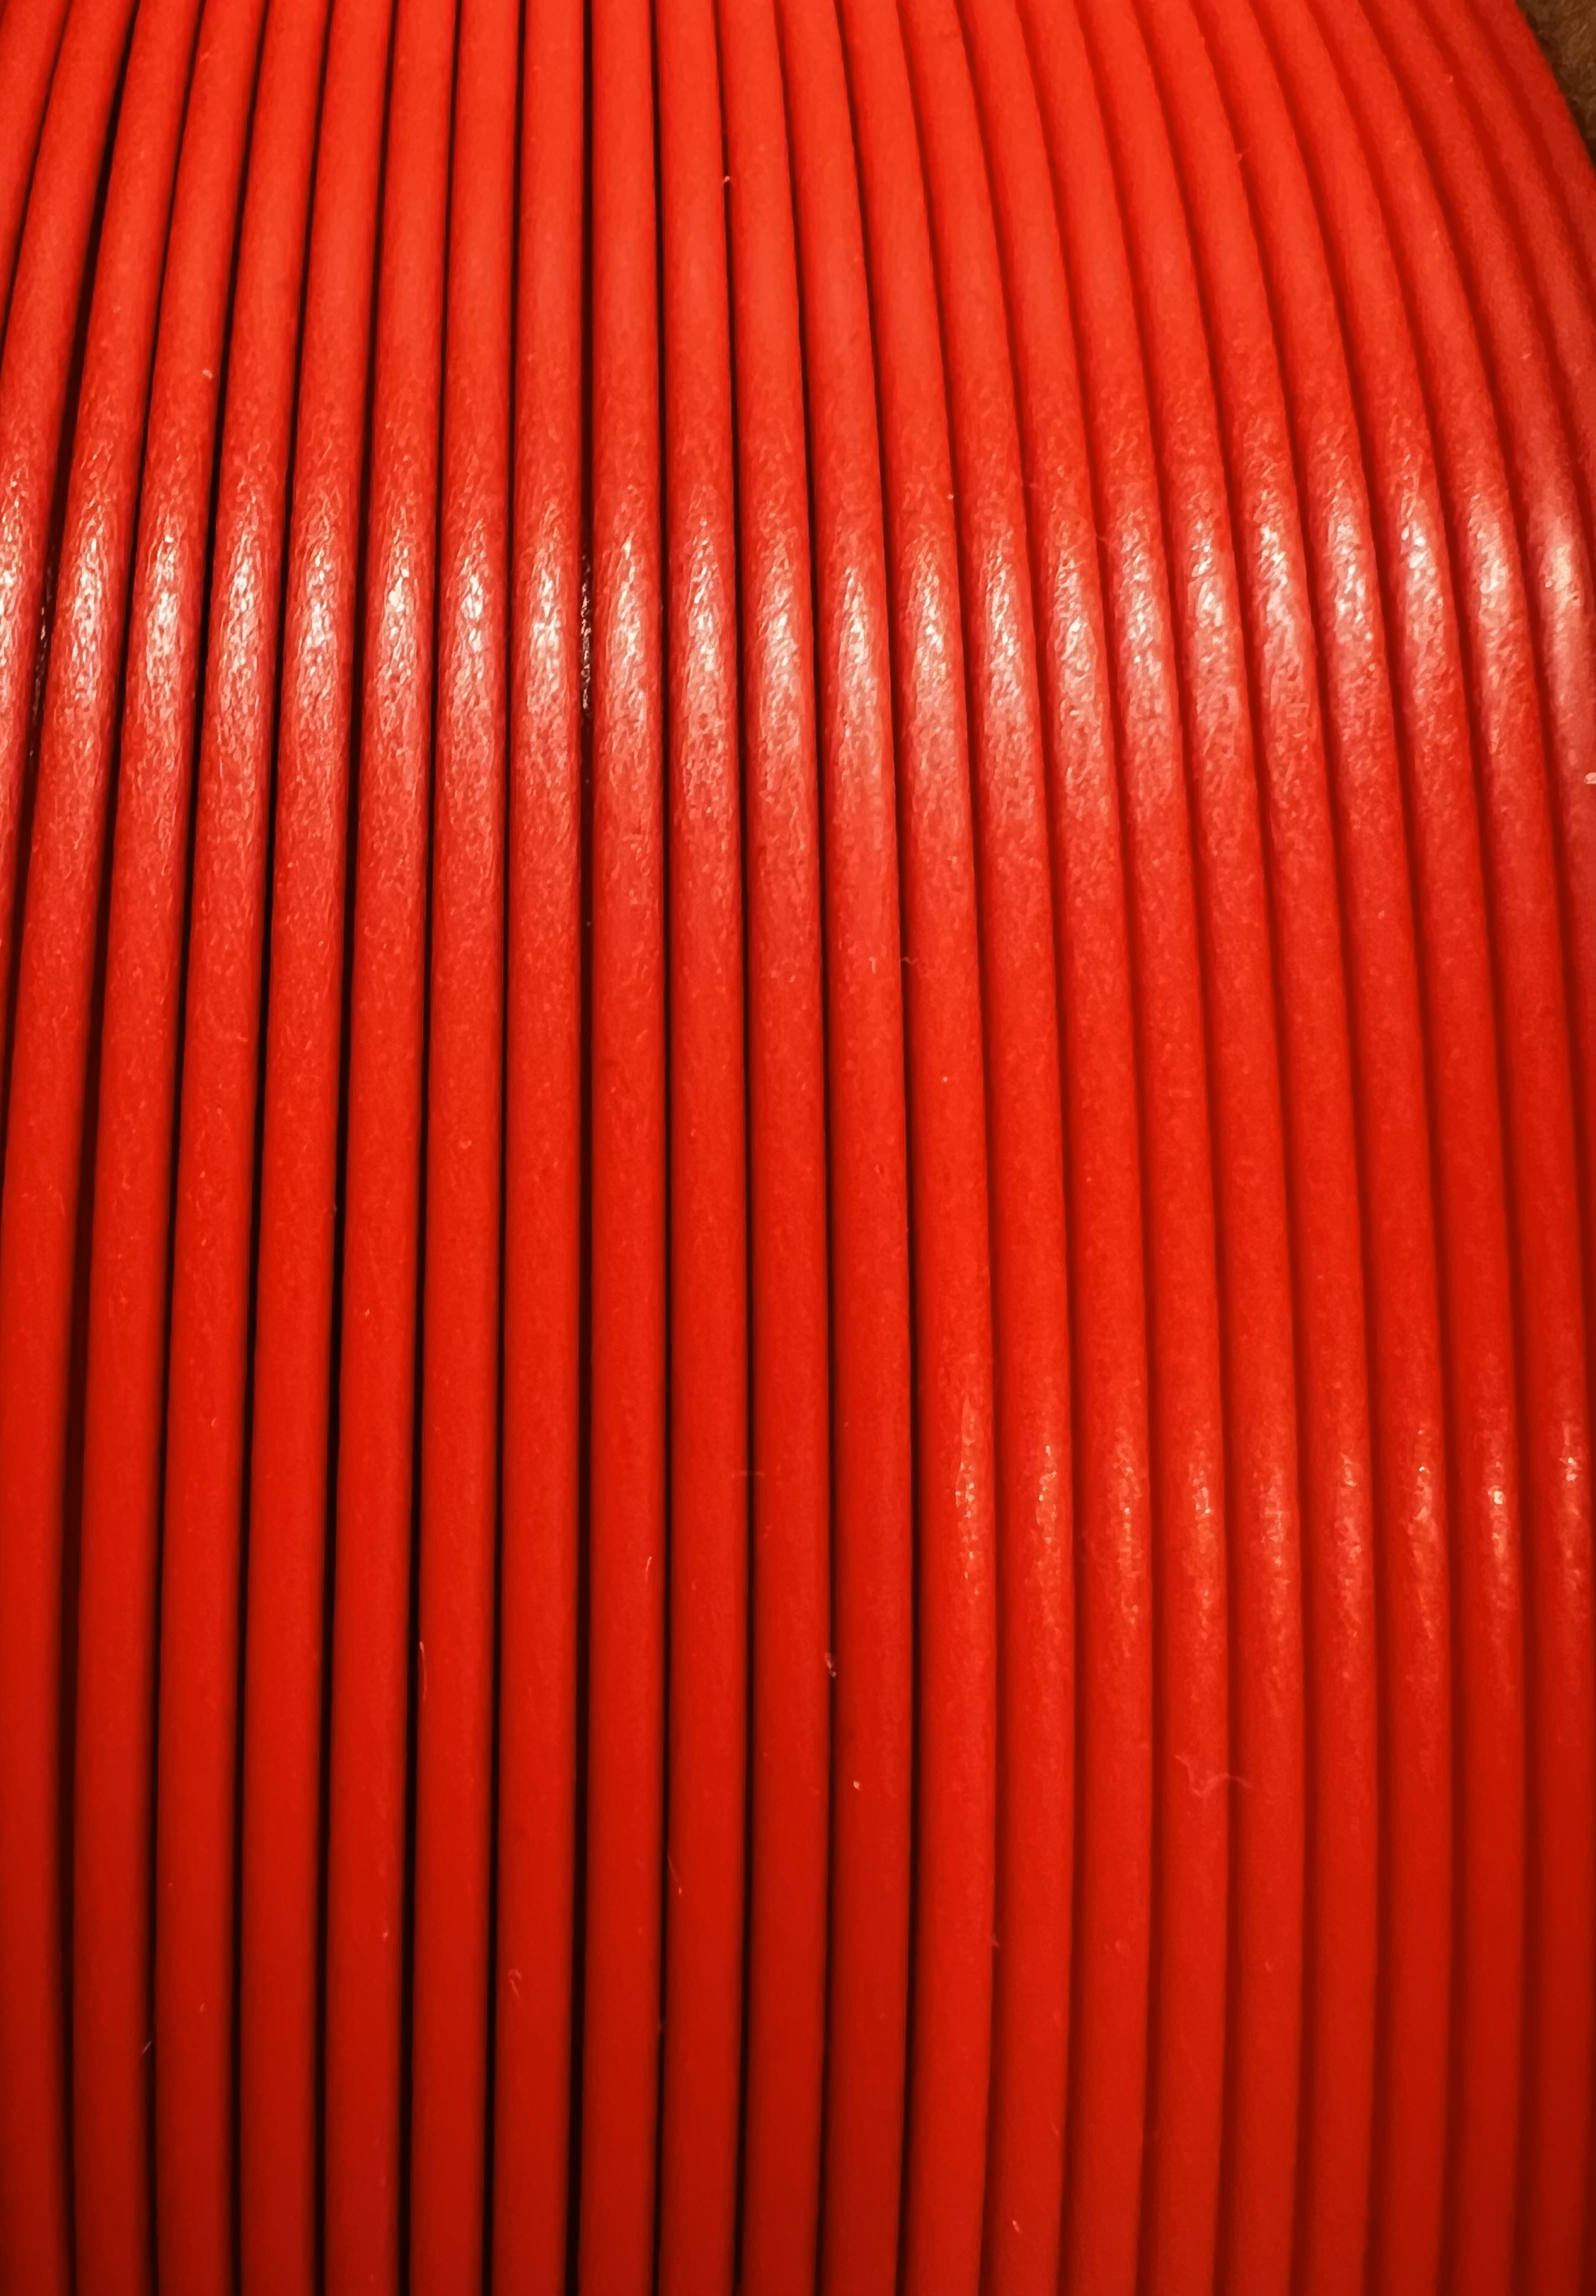 PLA filament ABAFLEX red, 1.75 ± 0.019 mm, 750g, cívka 64mm